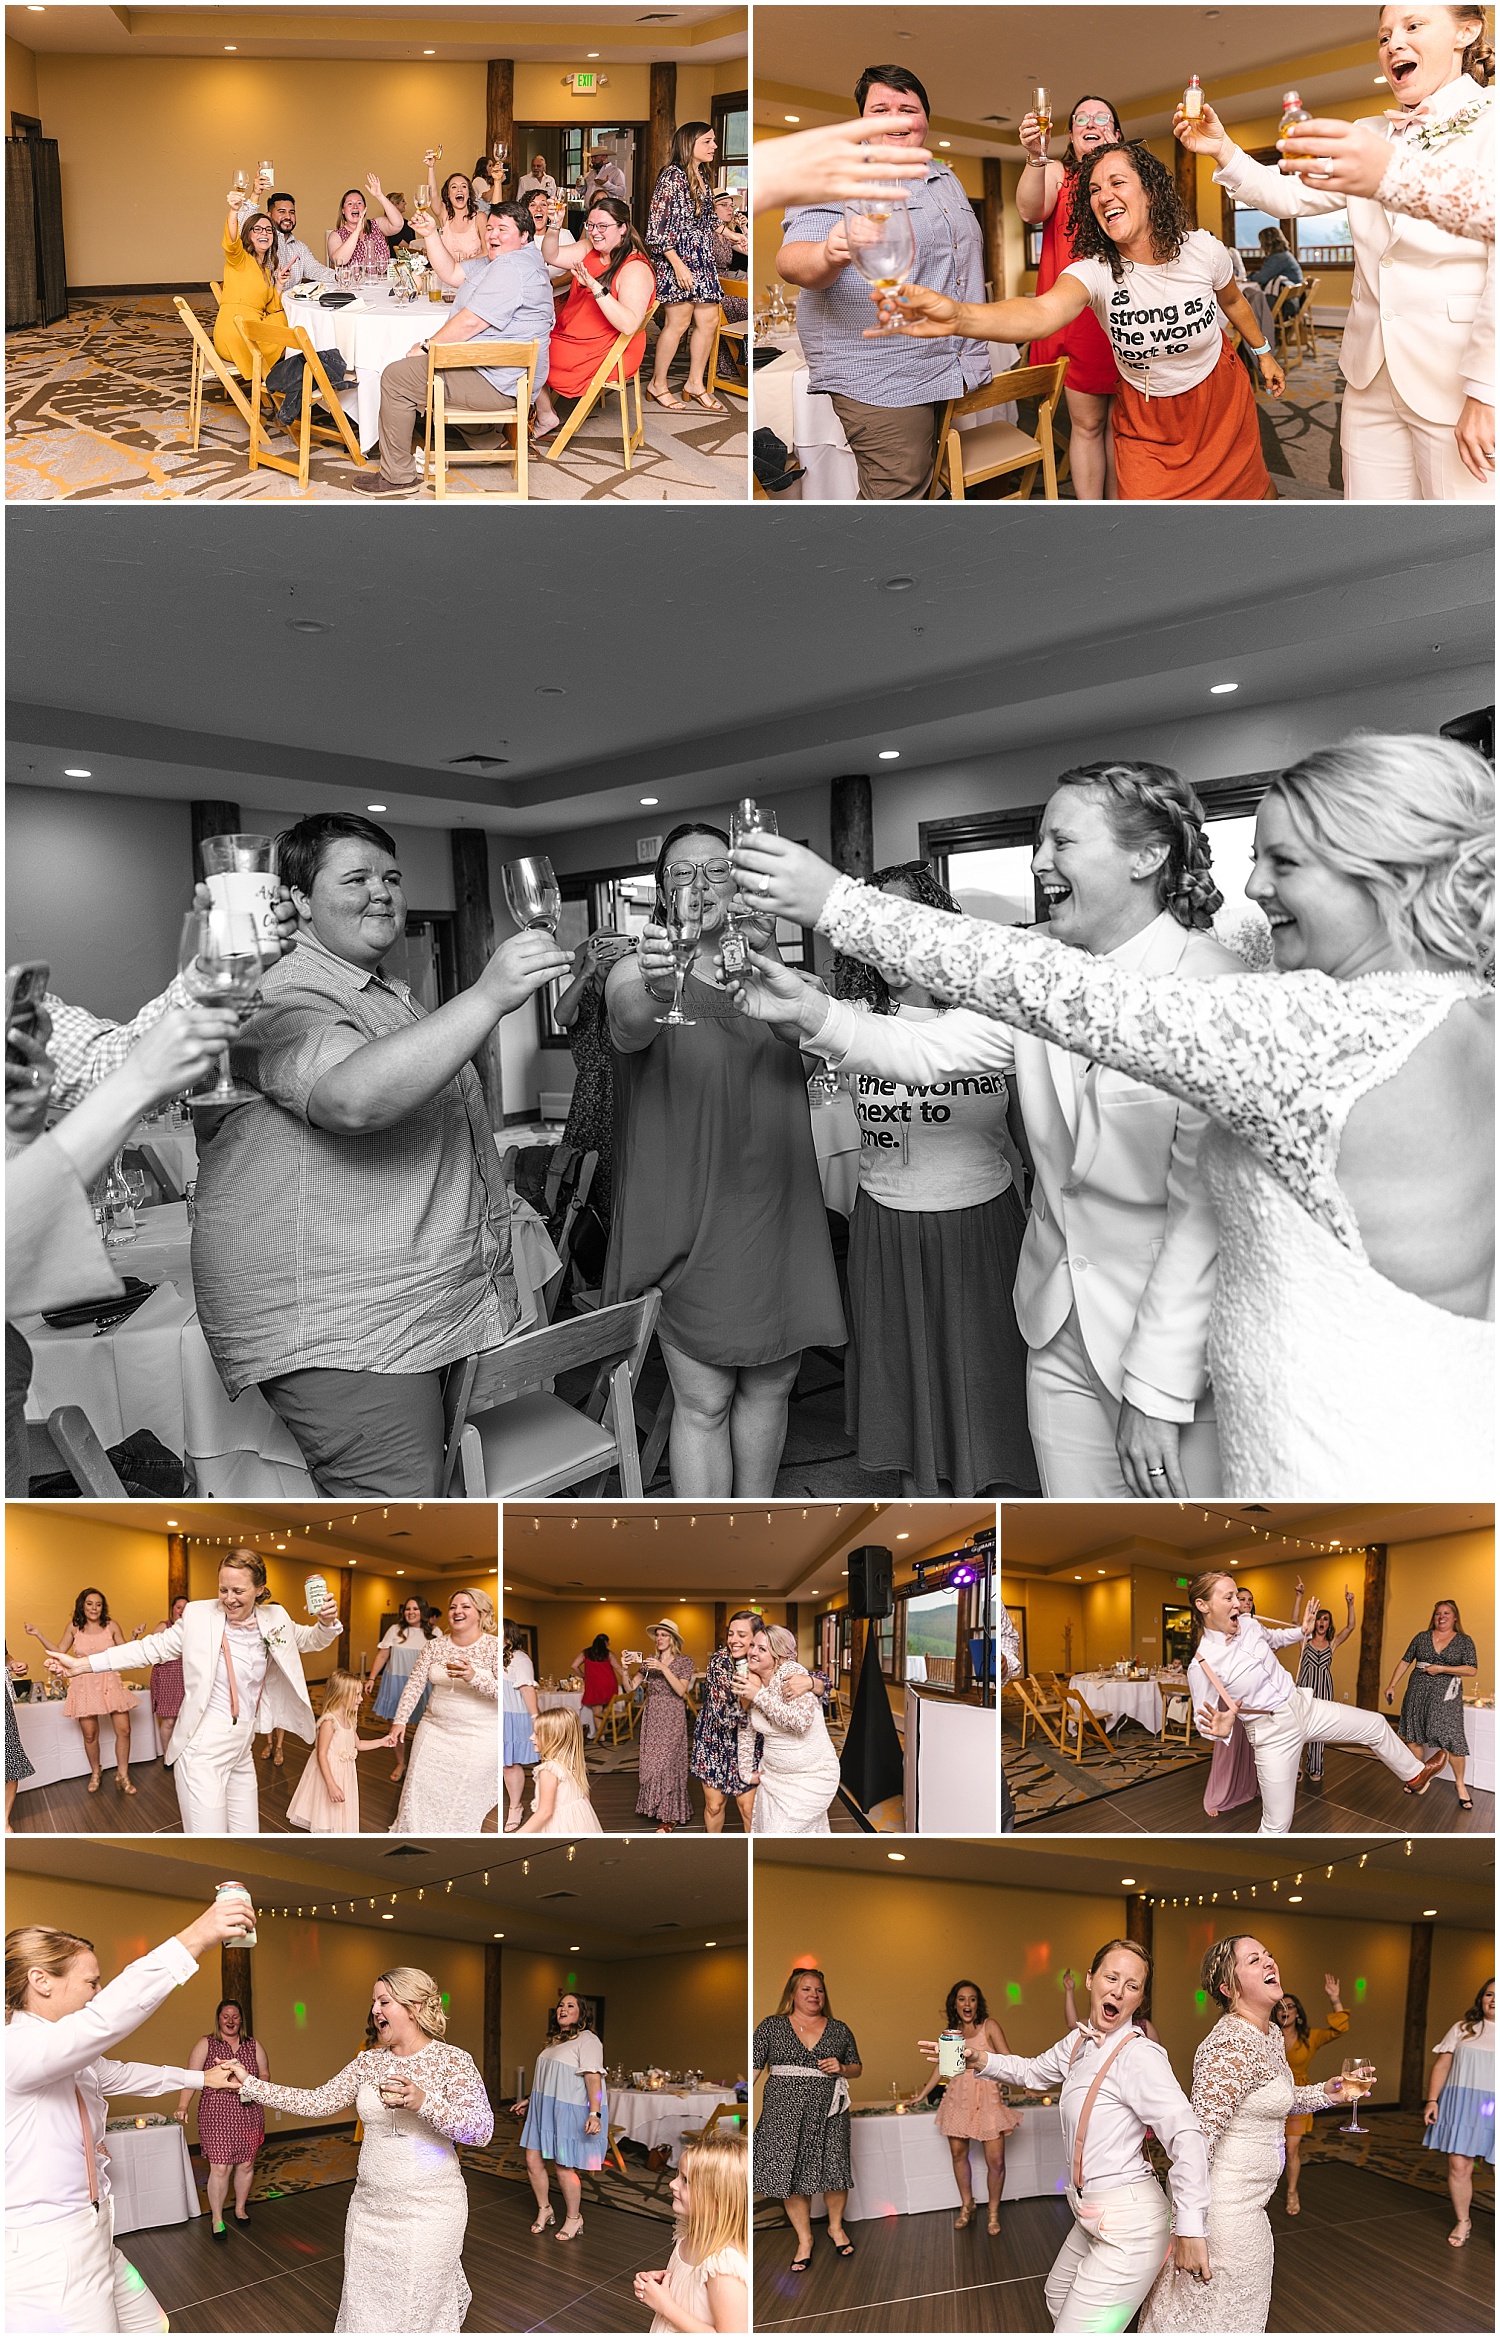 Lodge at Breckenridge wedding reception dancing